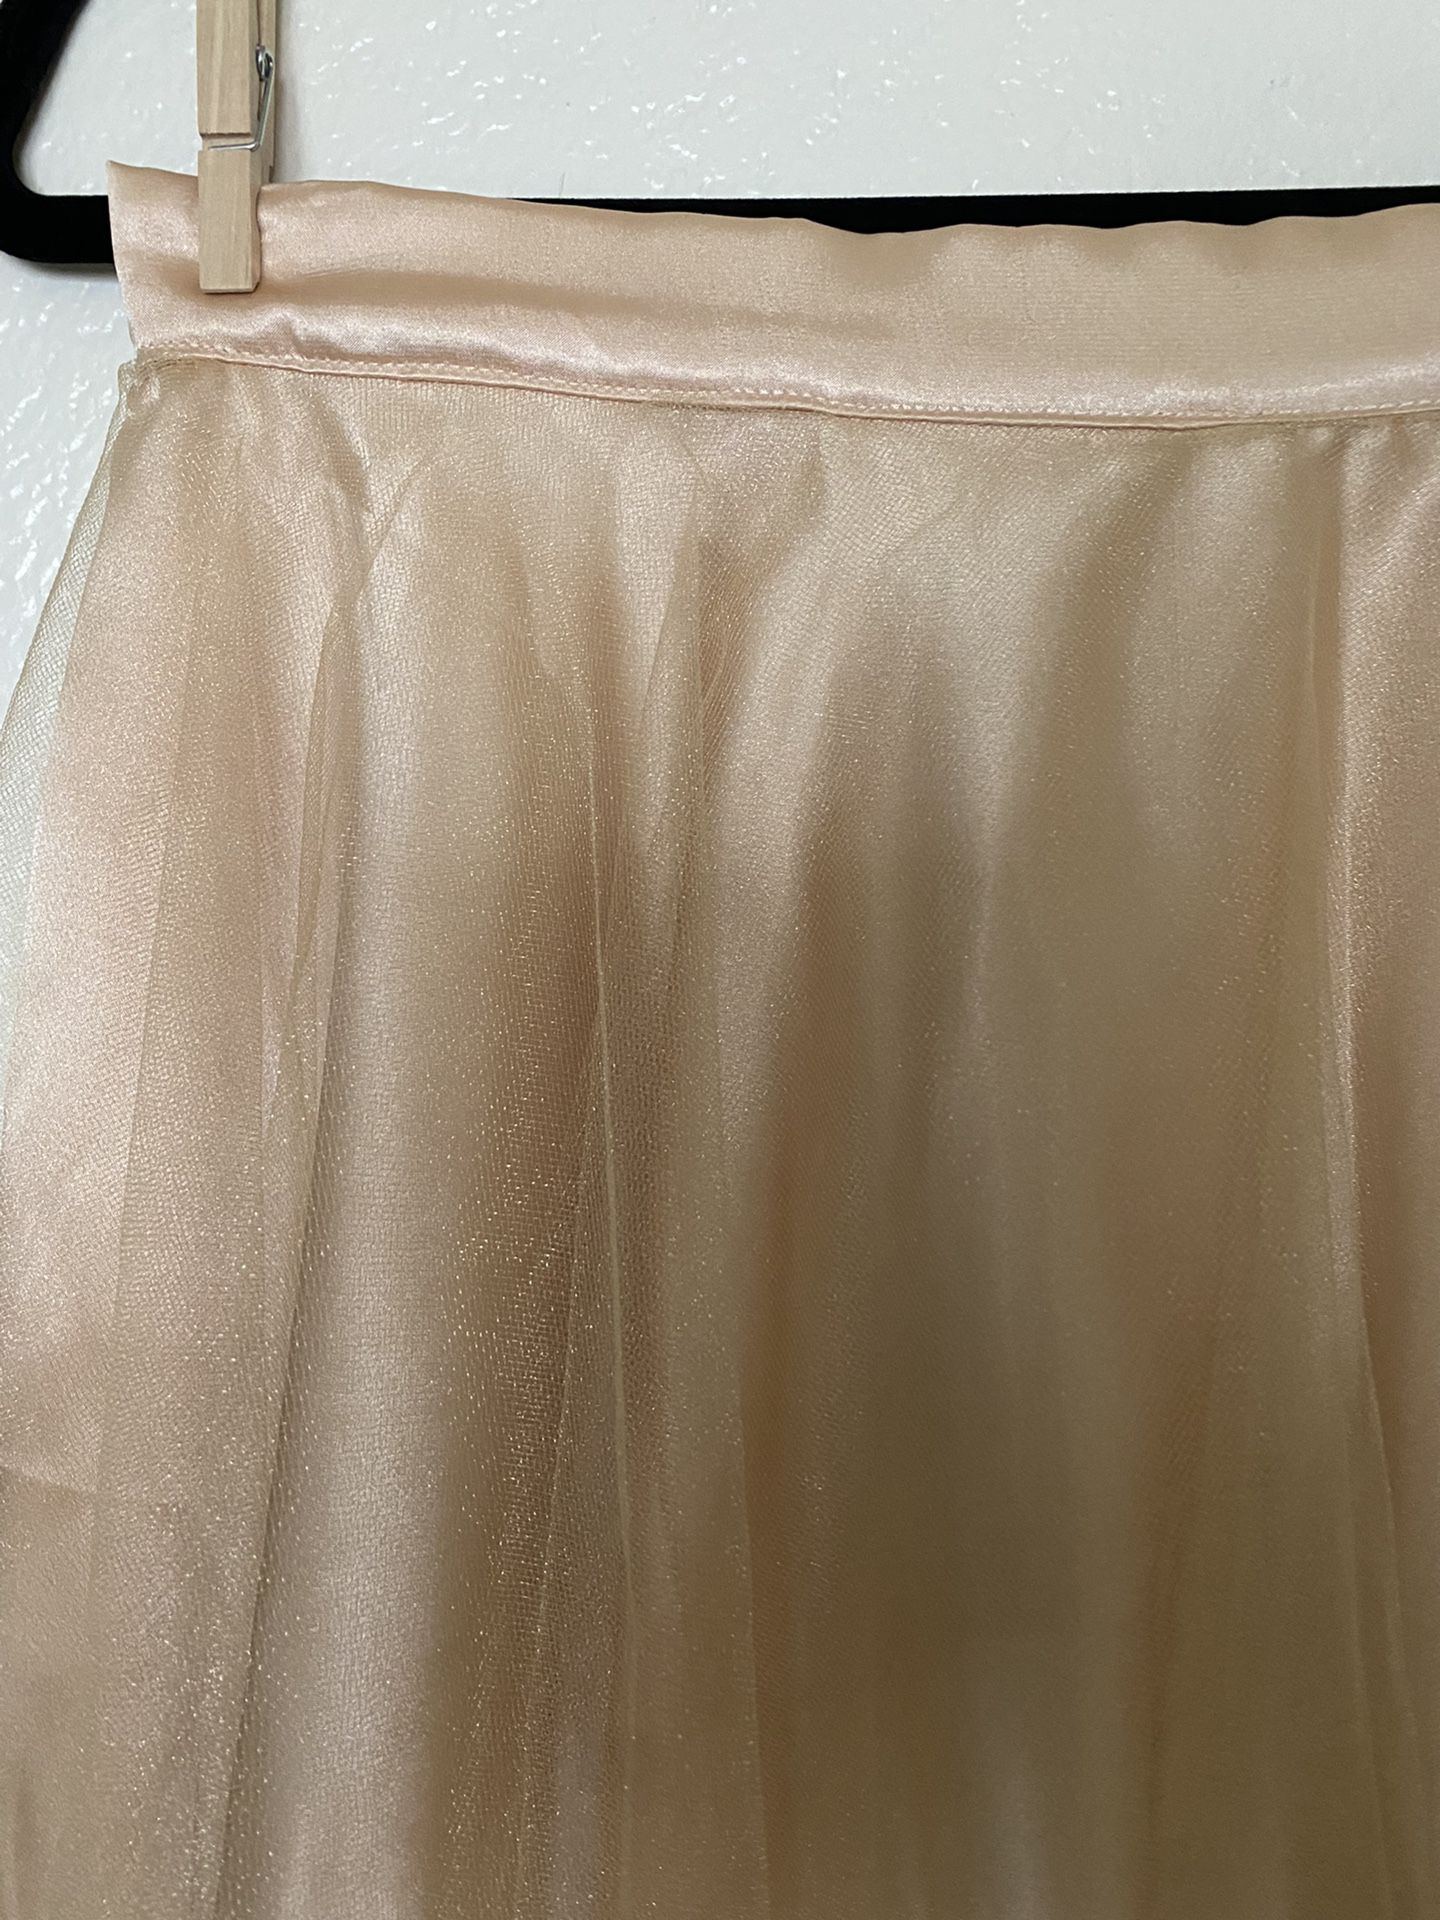 Vintage Peach Satin and Tulle Skirt 